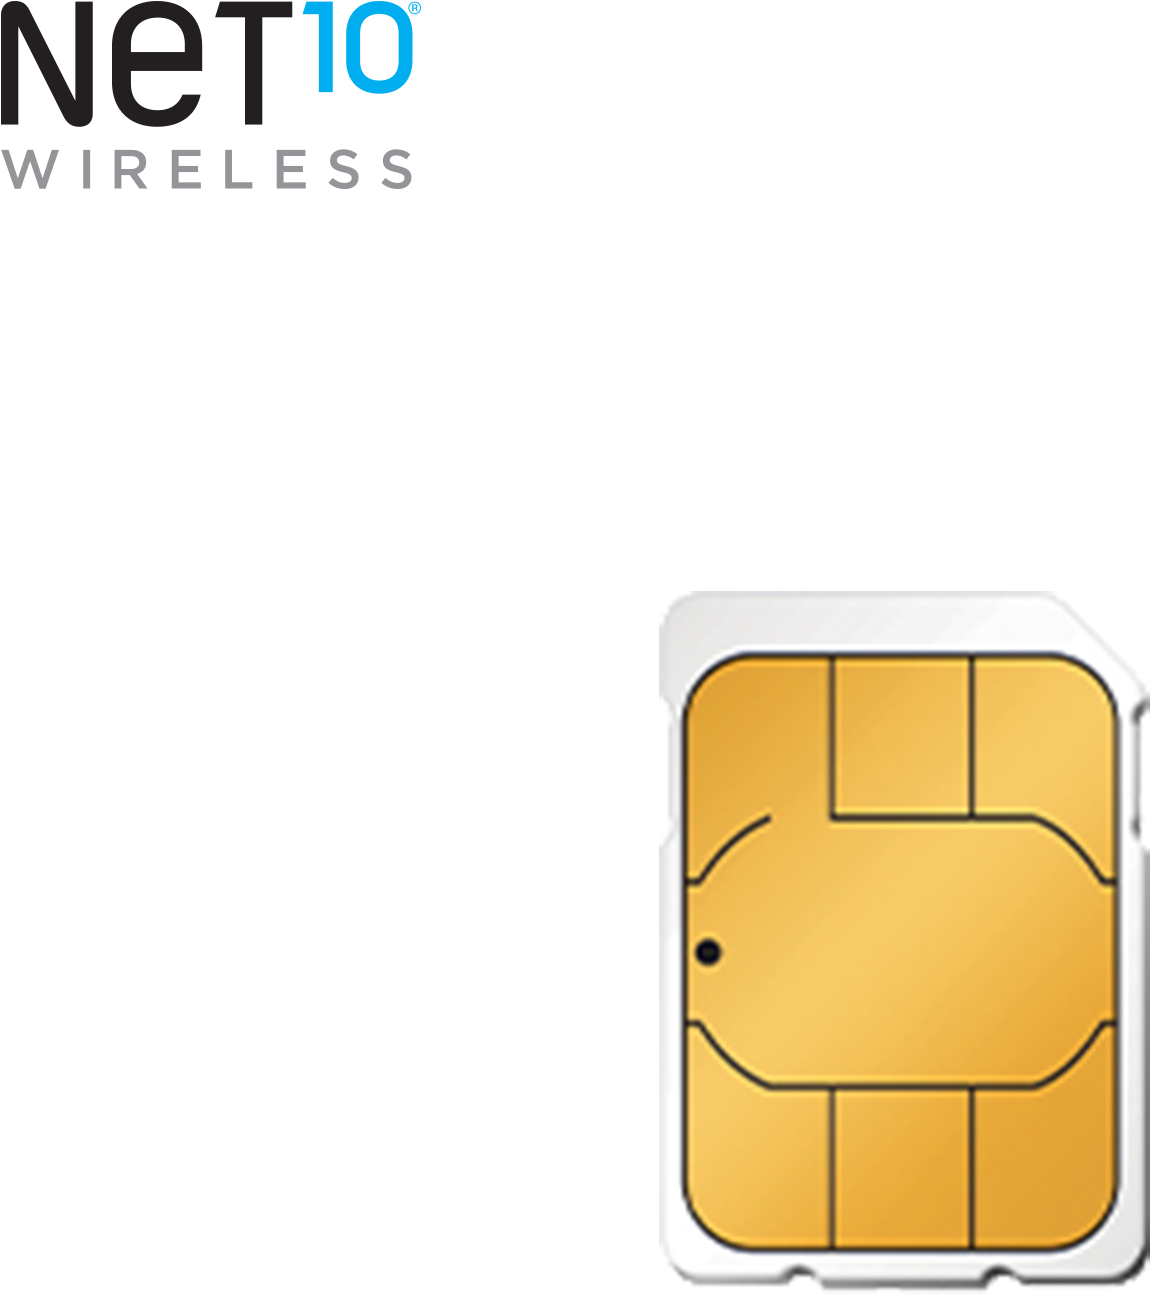 Net10 Wireless S I M Card